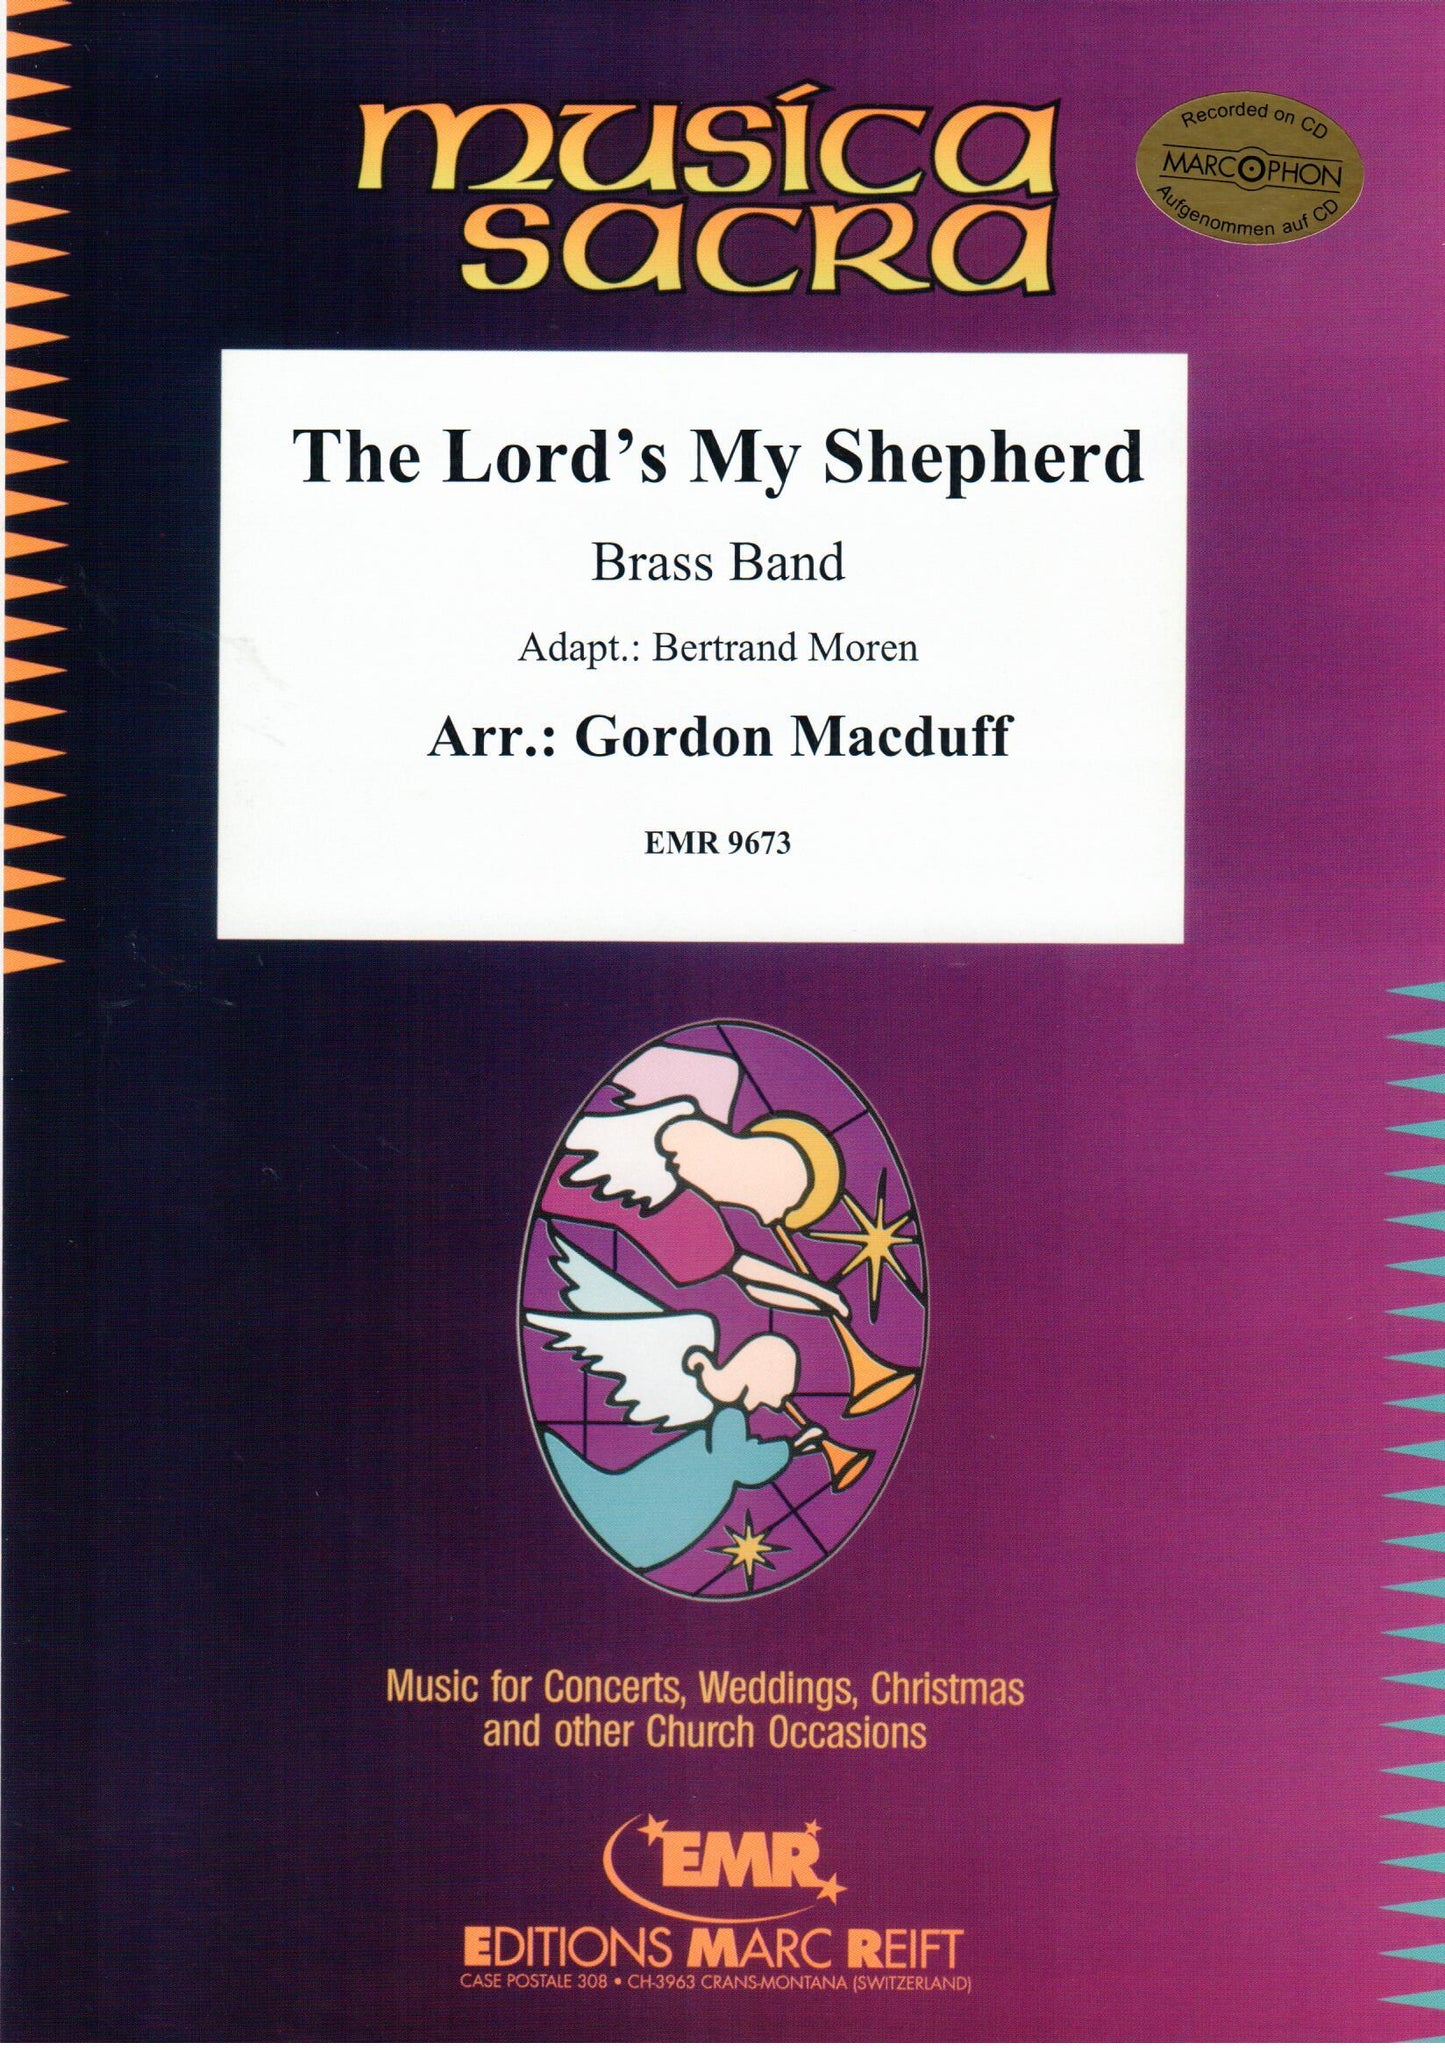 The Lord's My Shepherd